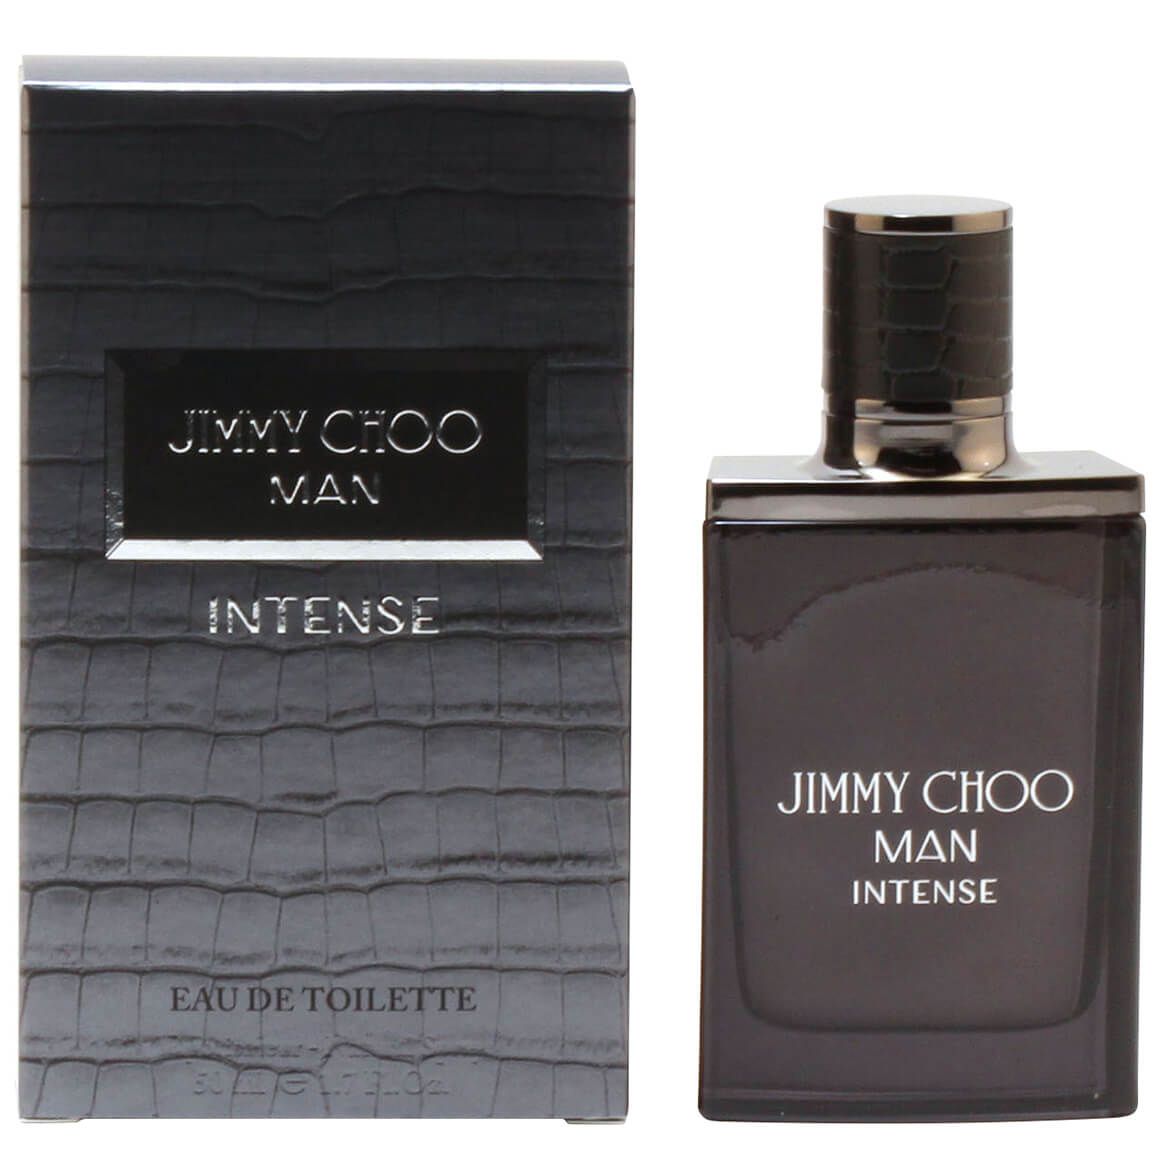 Jimmy Choo Man Intense EDT, 1.7 fl. oz. + '-' + 377187